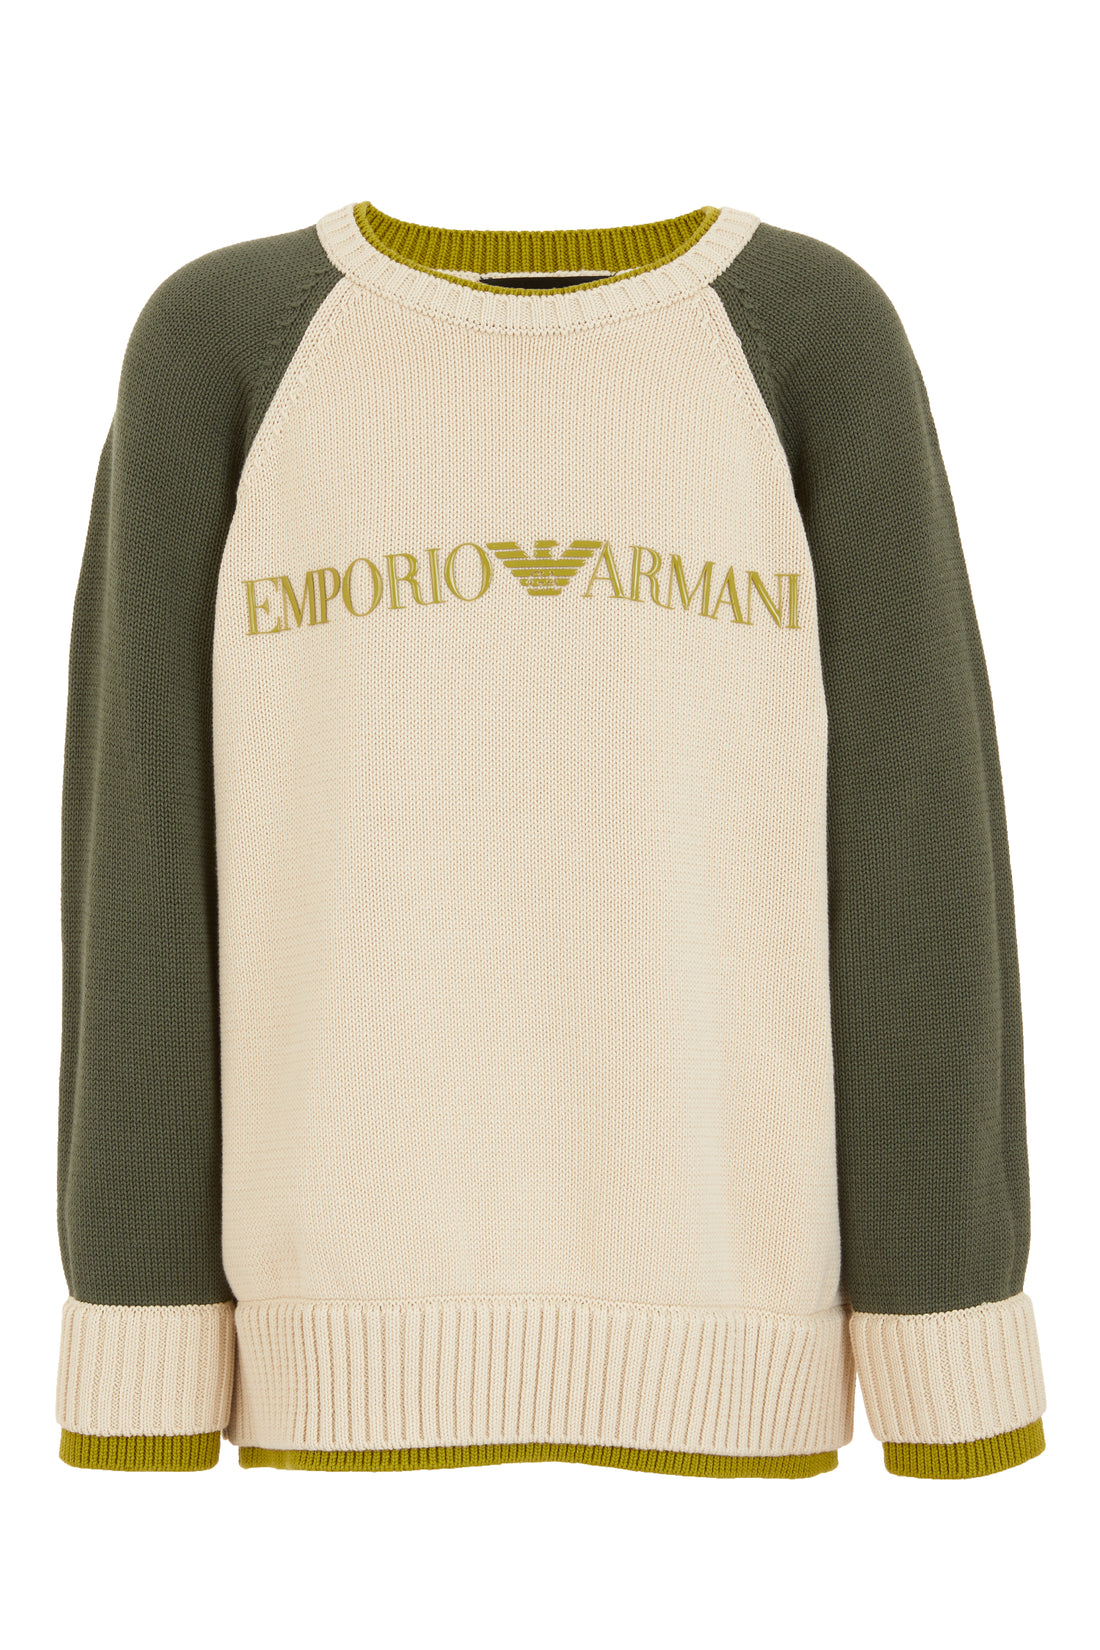 Emporio Armani Emporio Lime Knitted Pullover